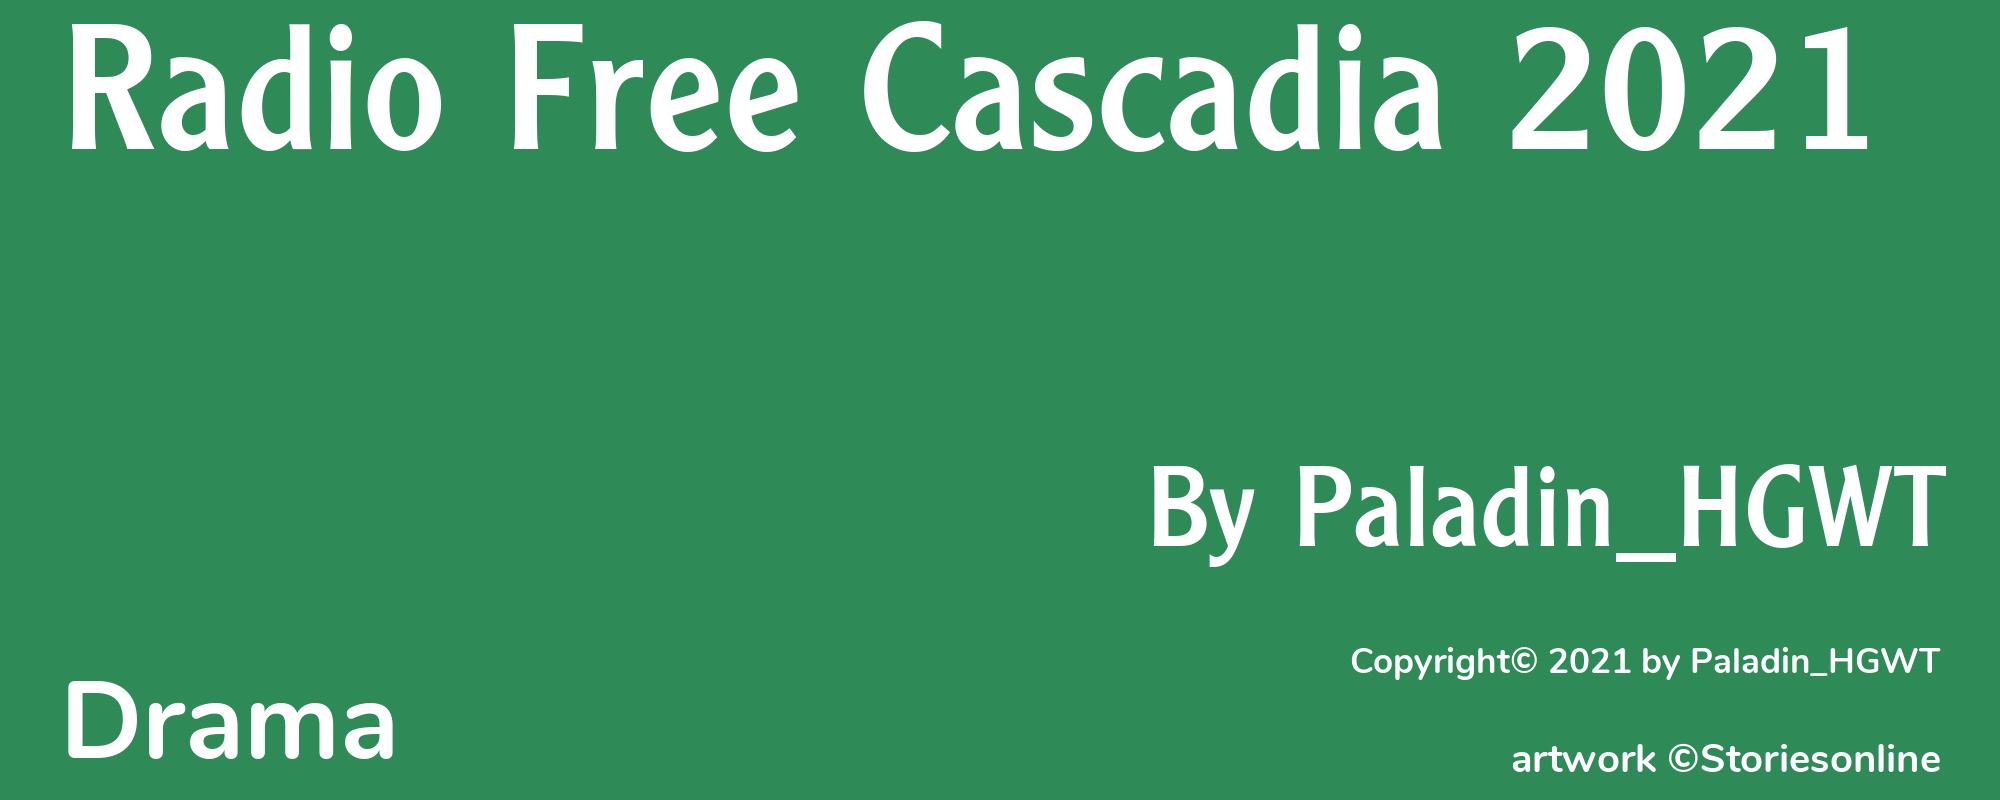 Radio Free Cascadia 2021 - Cover